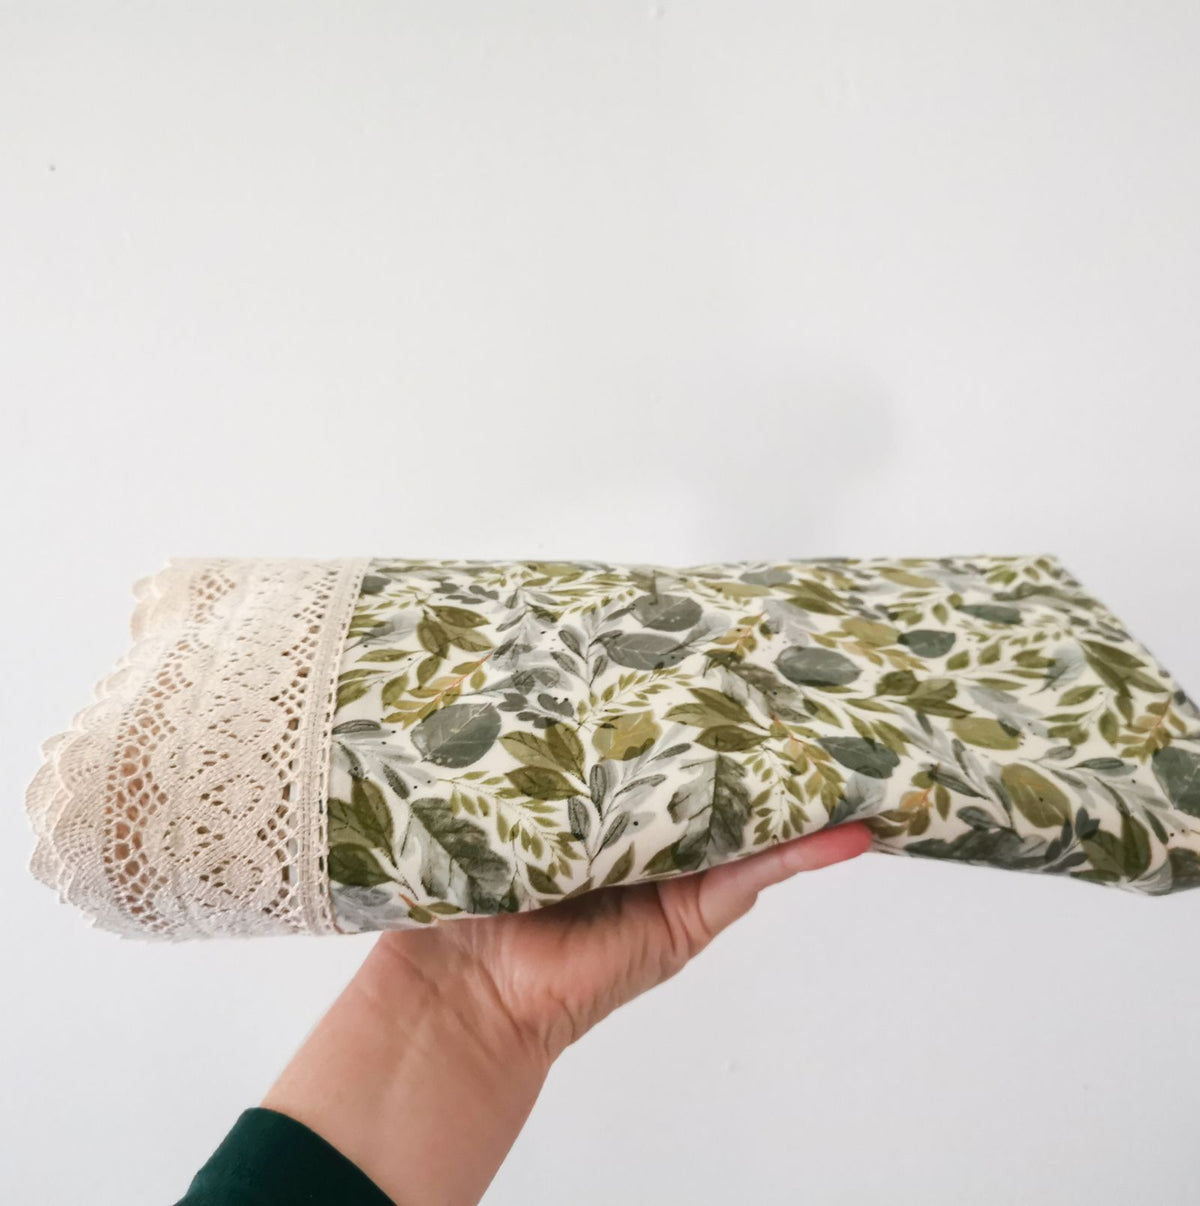 The Hunter - grey and green leaf print blanket